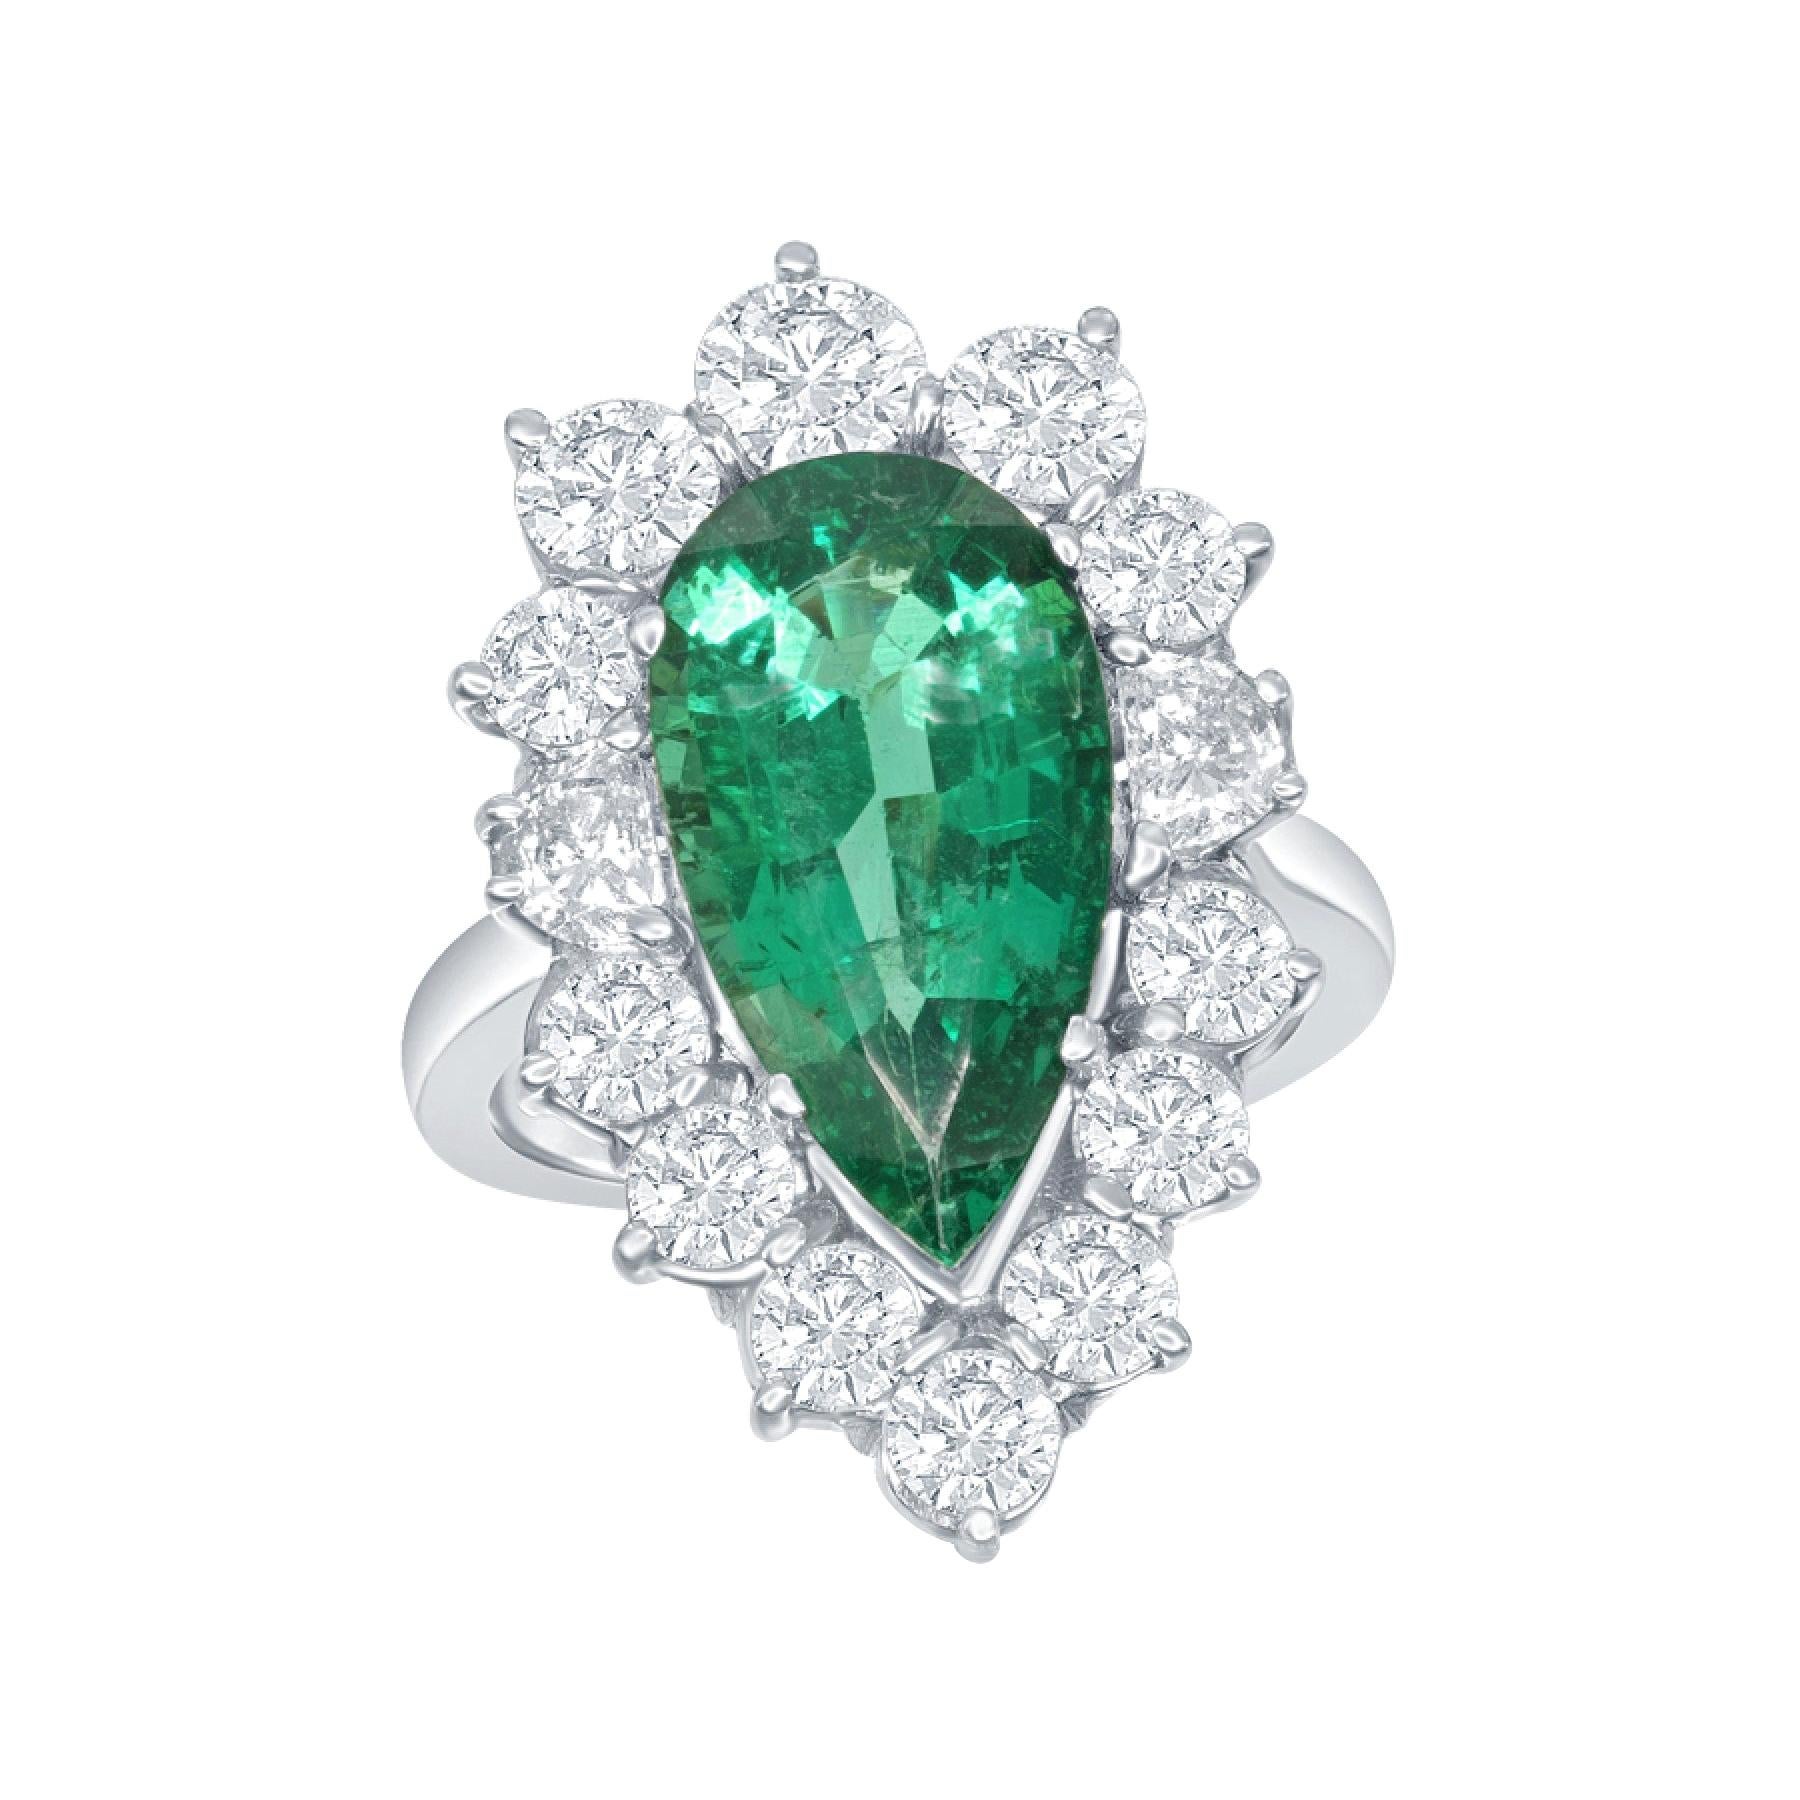 4.57 Carat Pear Shape Emerald with 2.48 Carat of Diamonds Set in Platinum For Sale